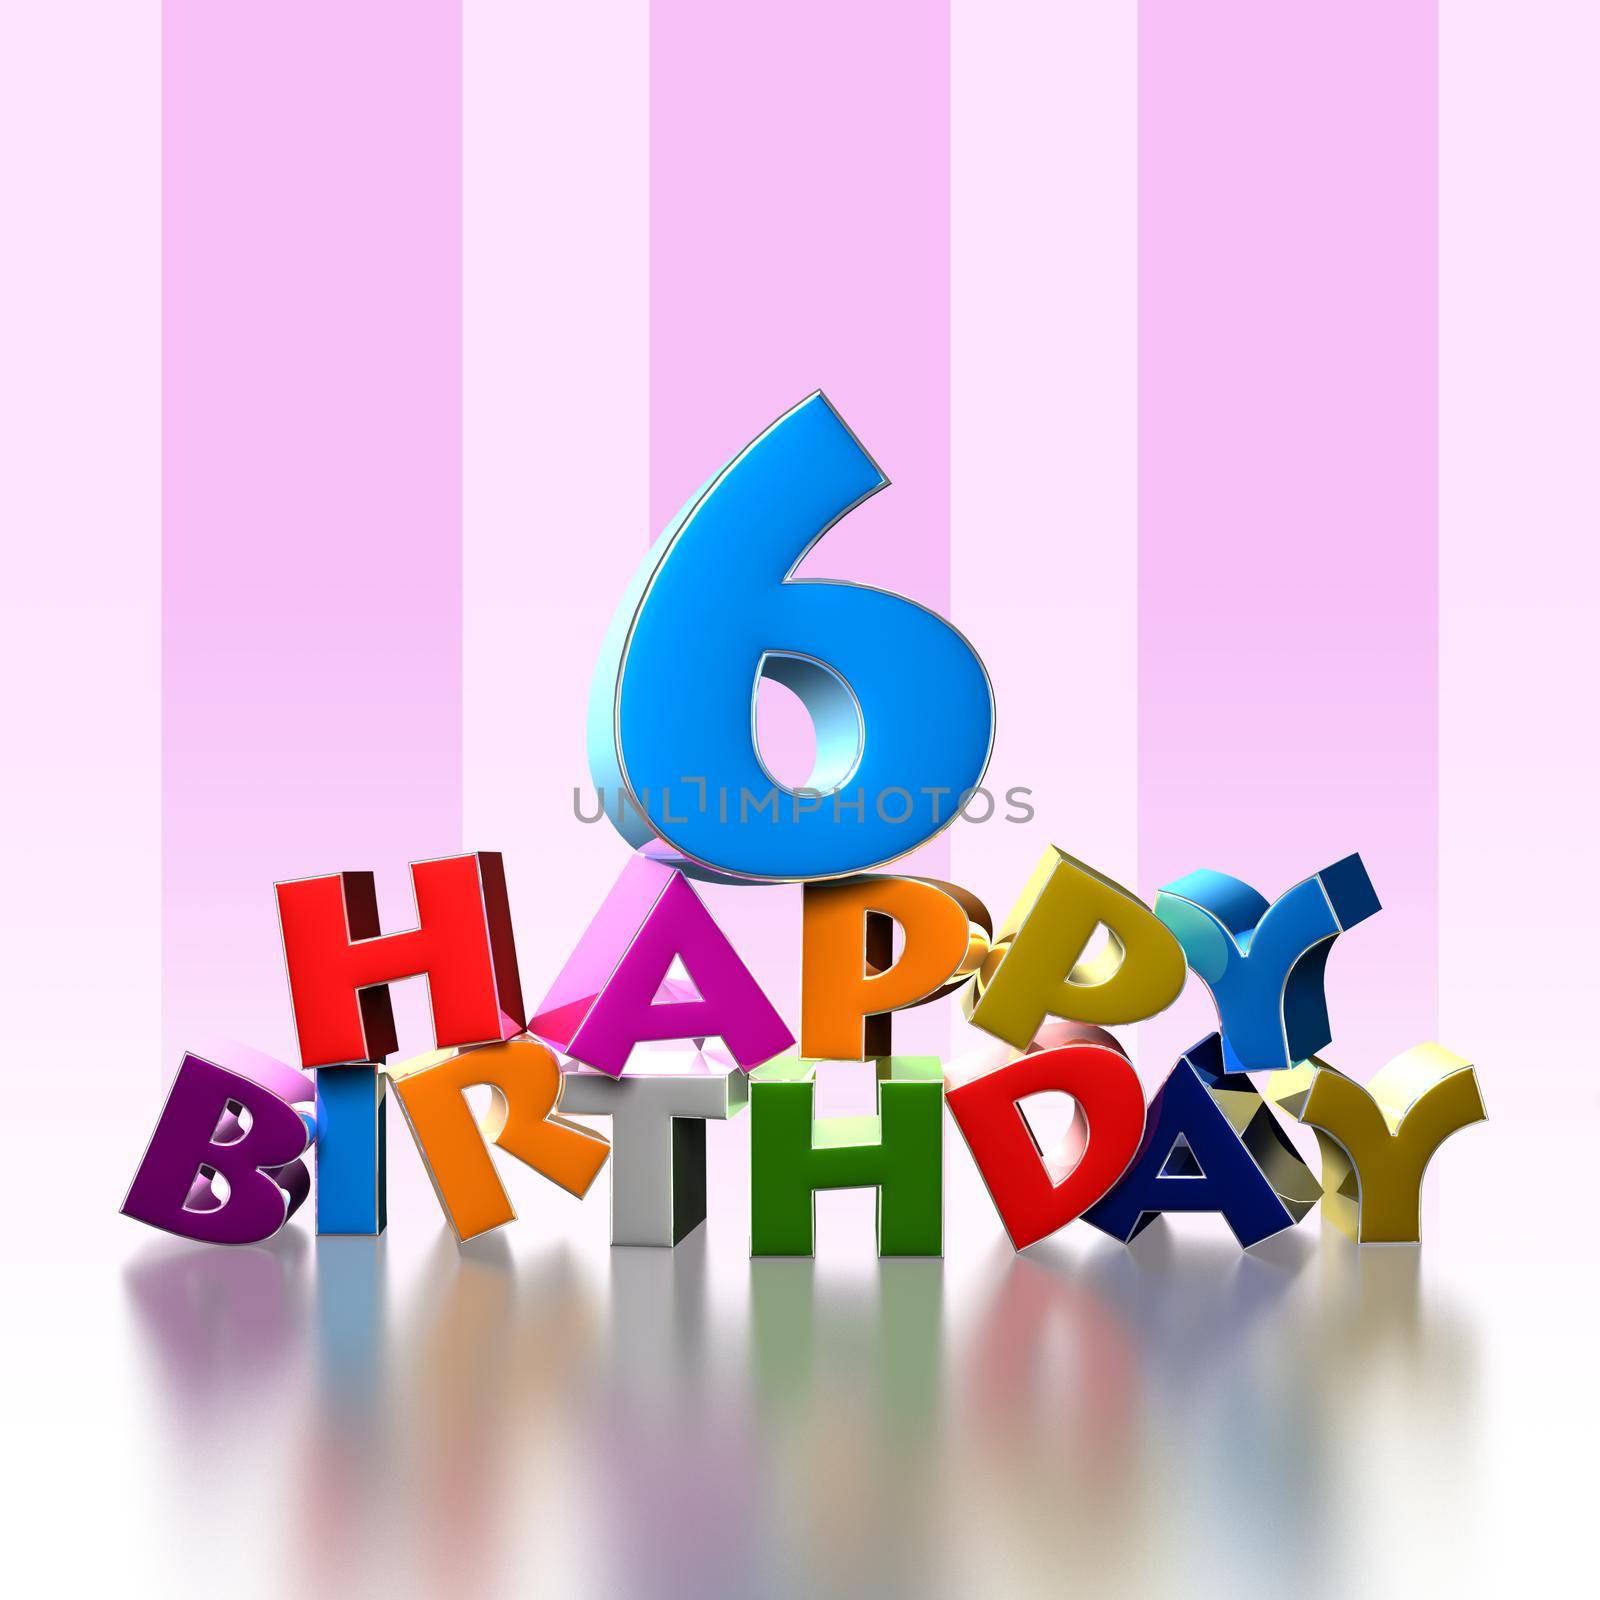 6 happy birthday 3D illustration on pink background.